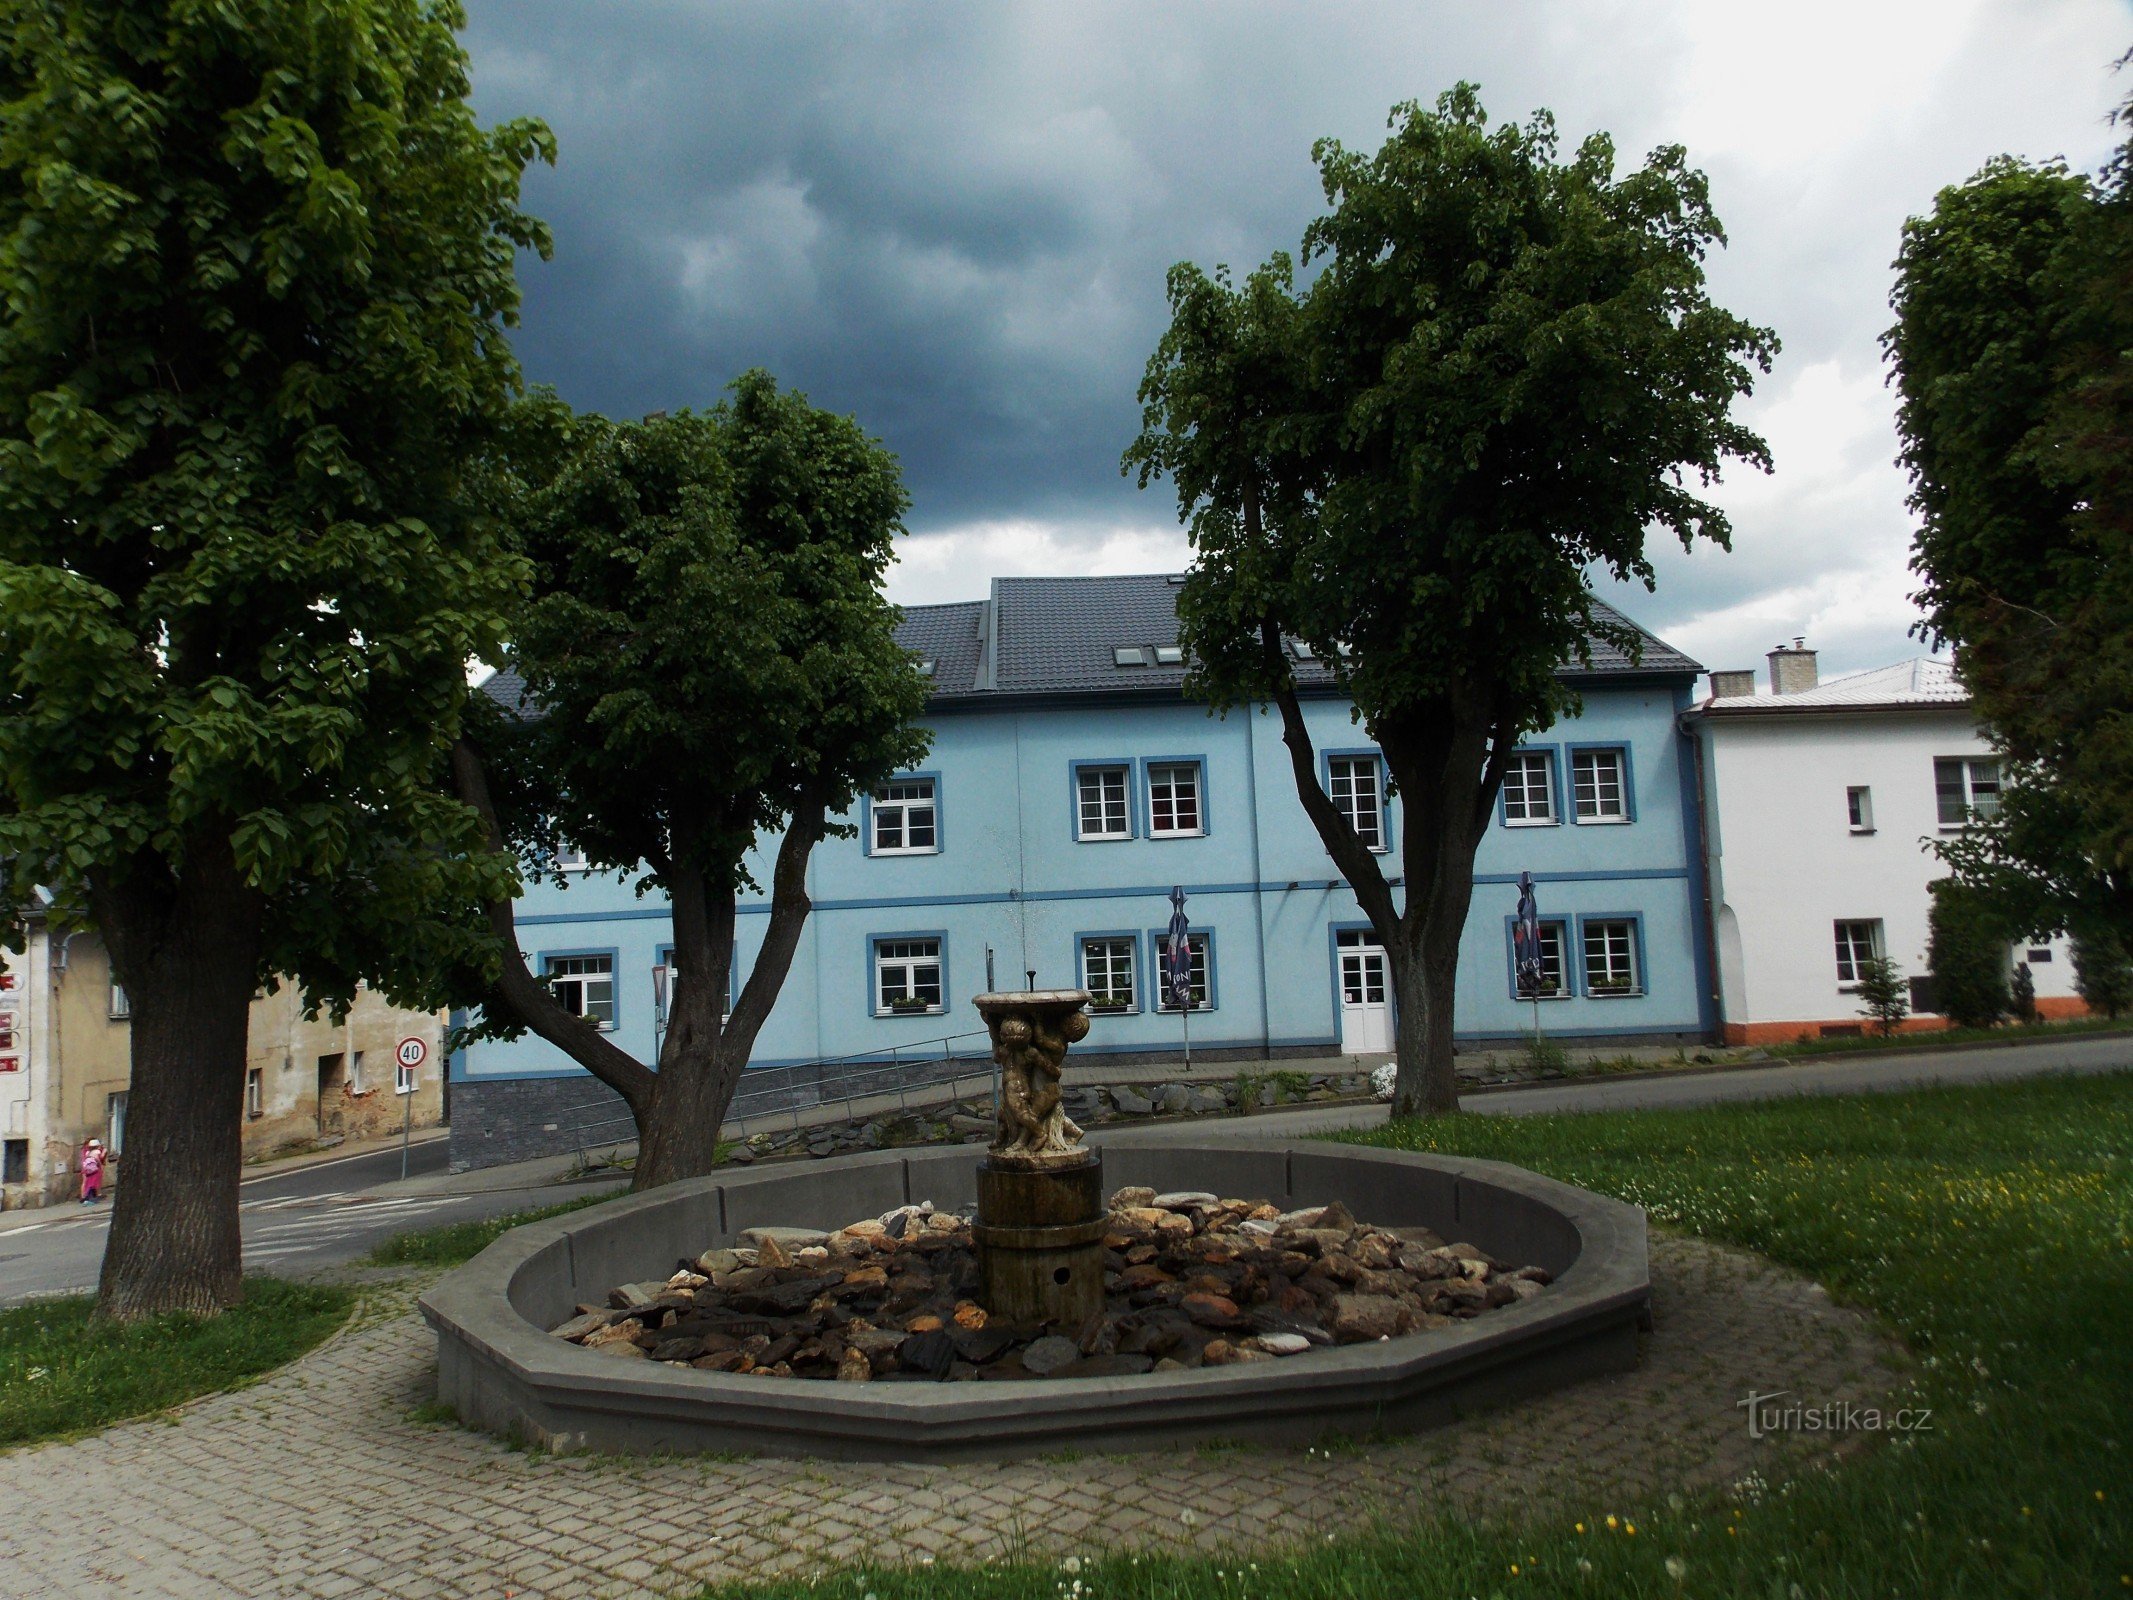 Vrbno pod Pradědem の広場にある帝国の噴水